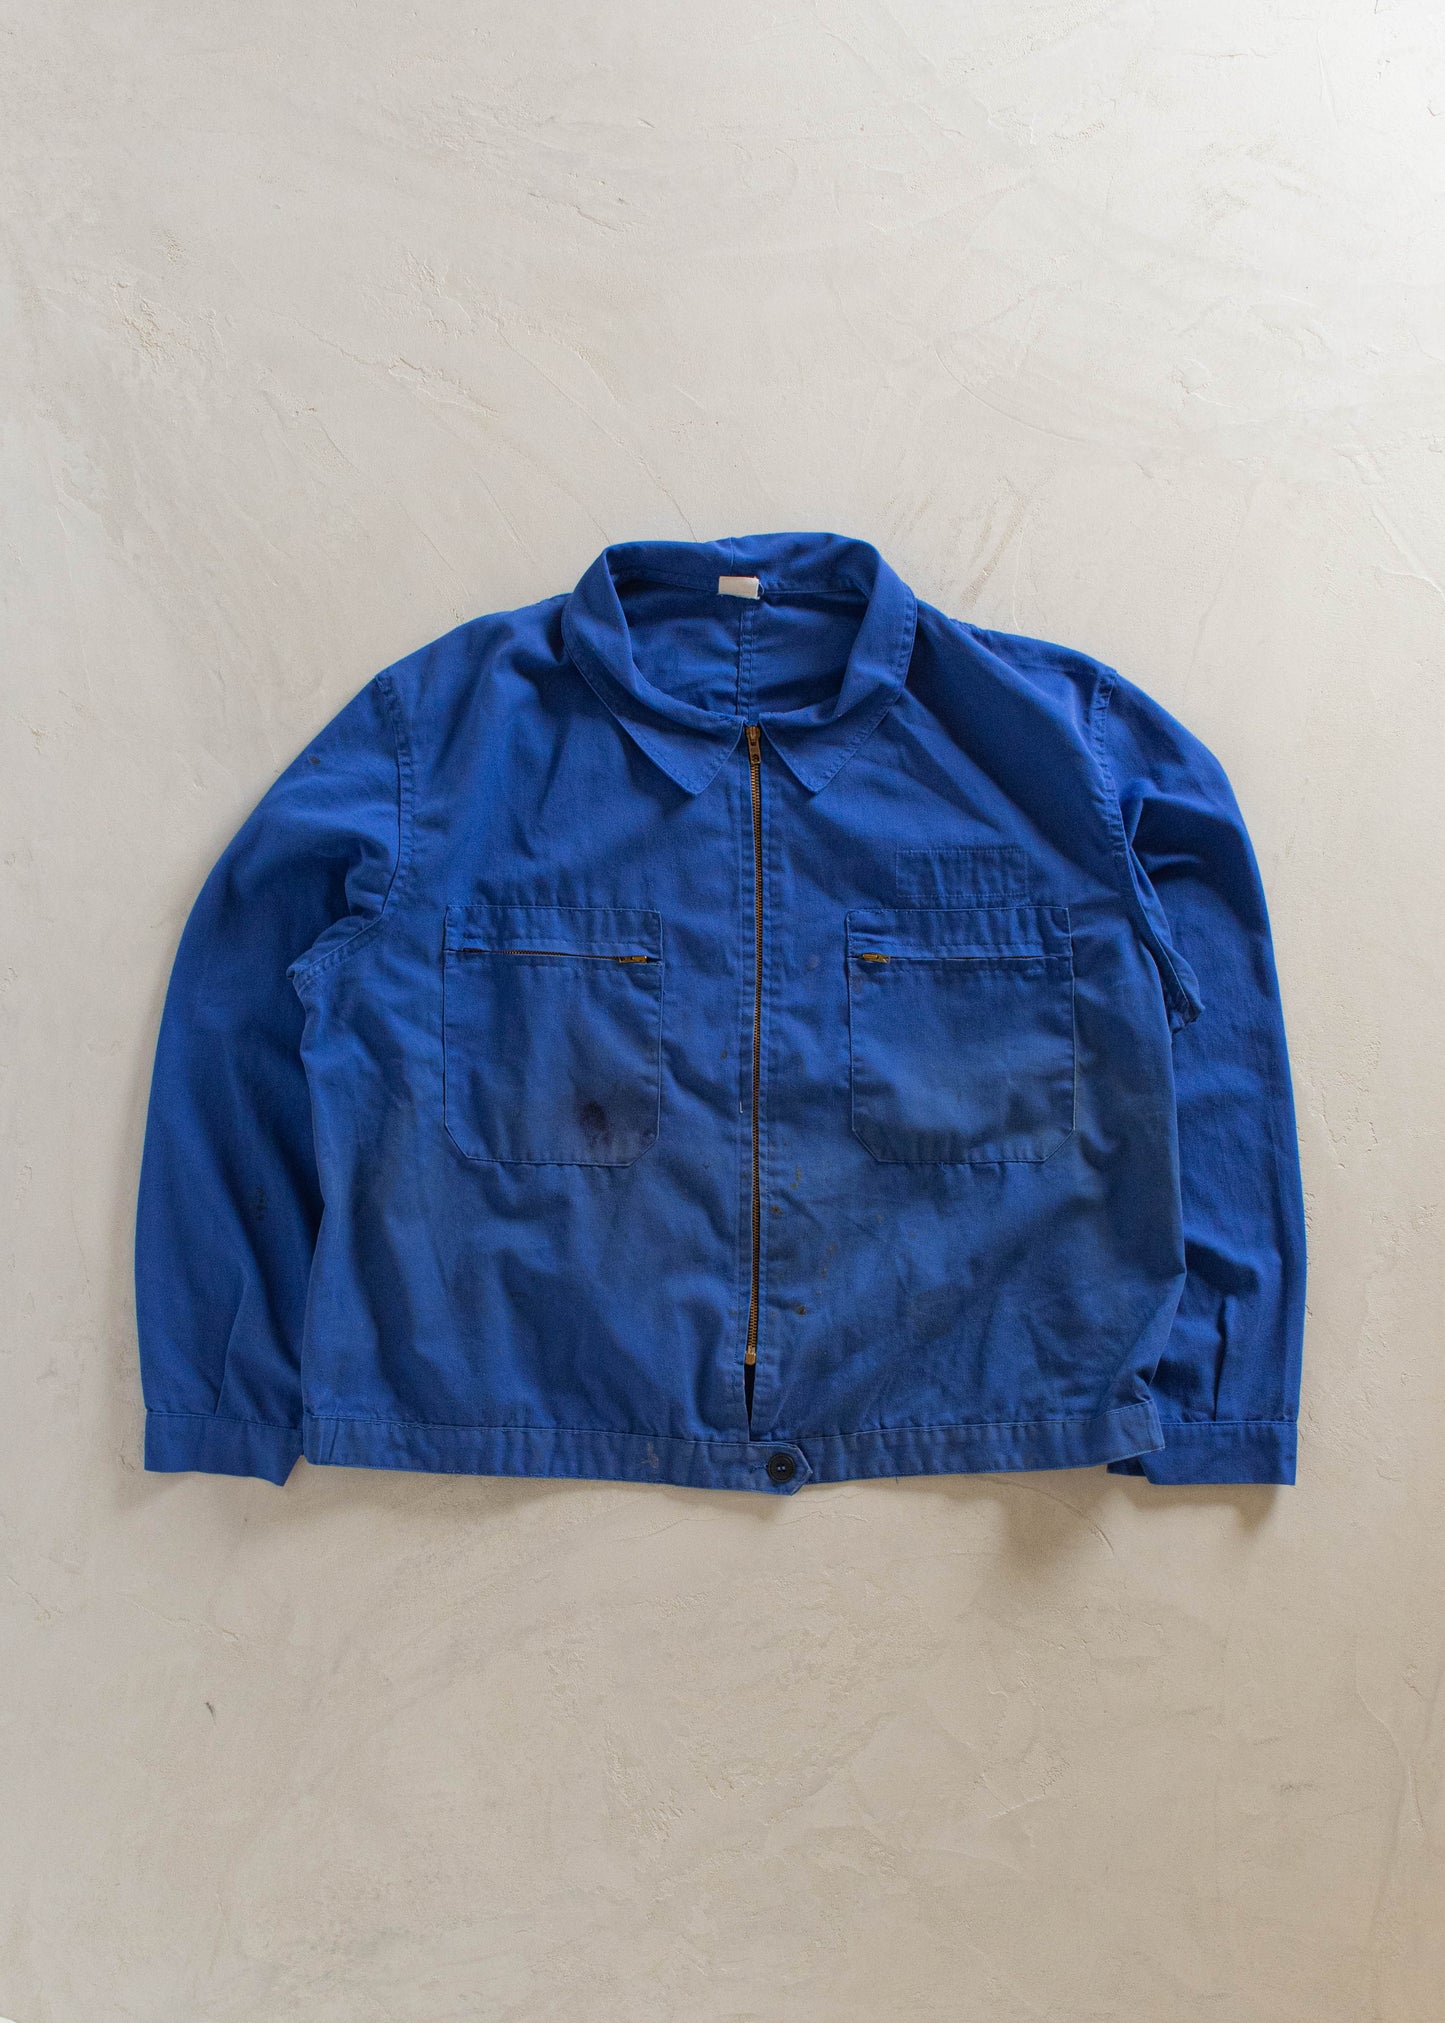 1980s Tergal European Workwear Zip Up Chore Jacket Size 2XL/3XL